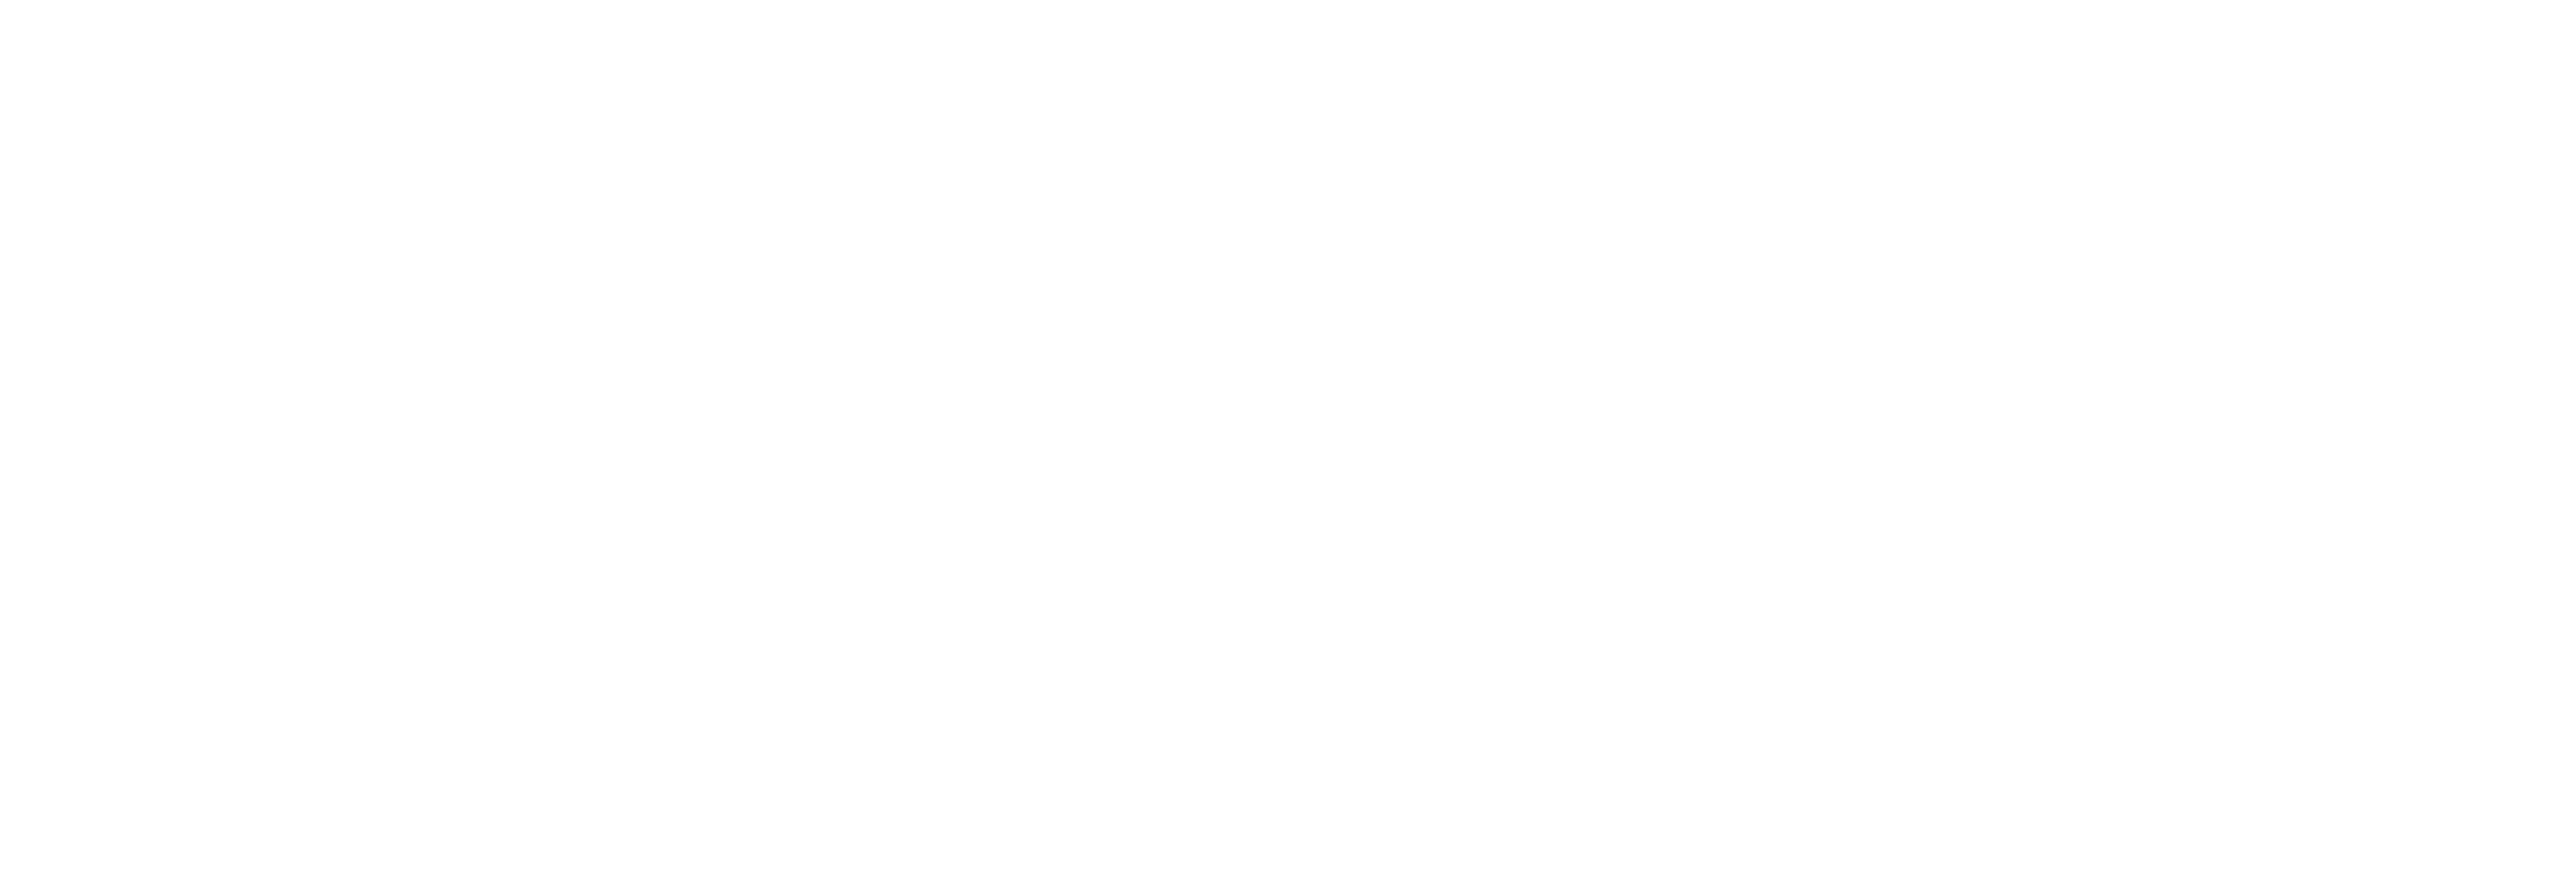 AniCura Schouwen-Duiveland - Burgh-Haamstede logo